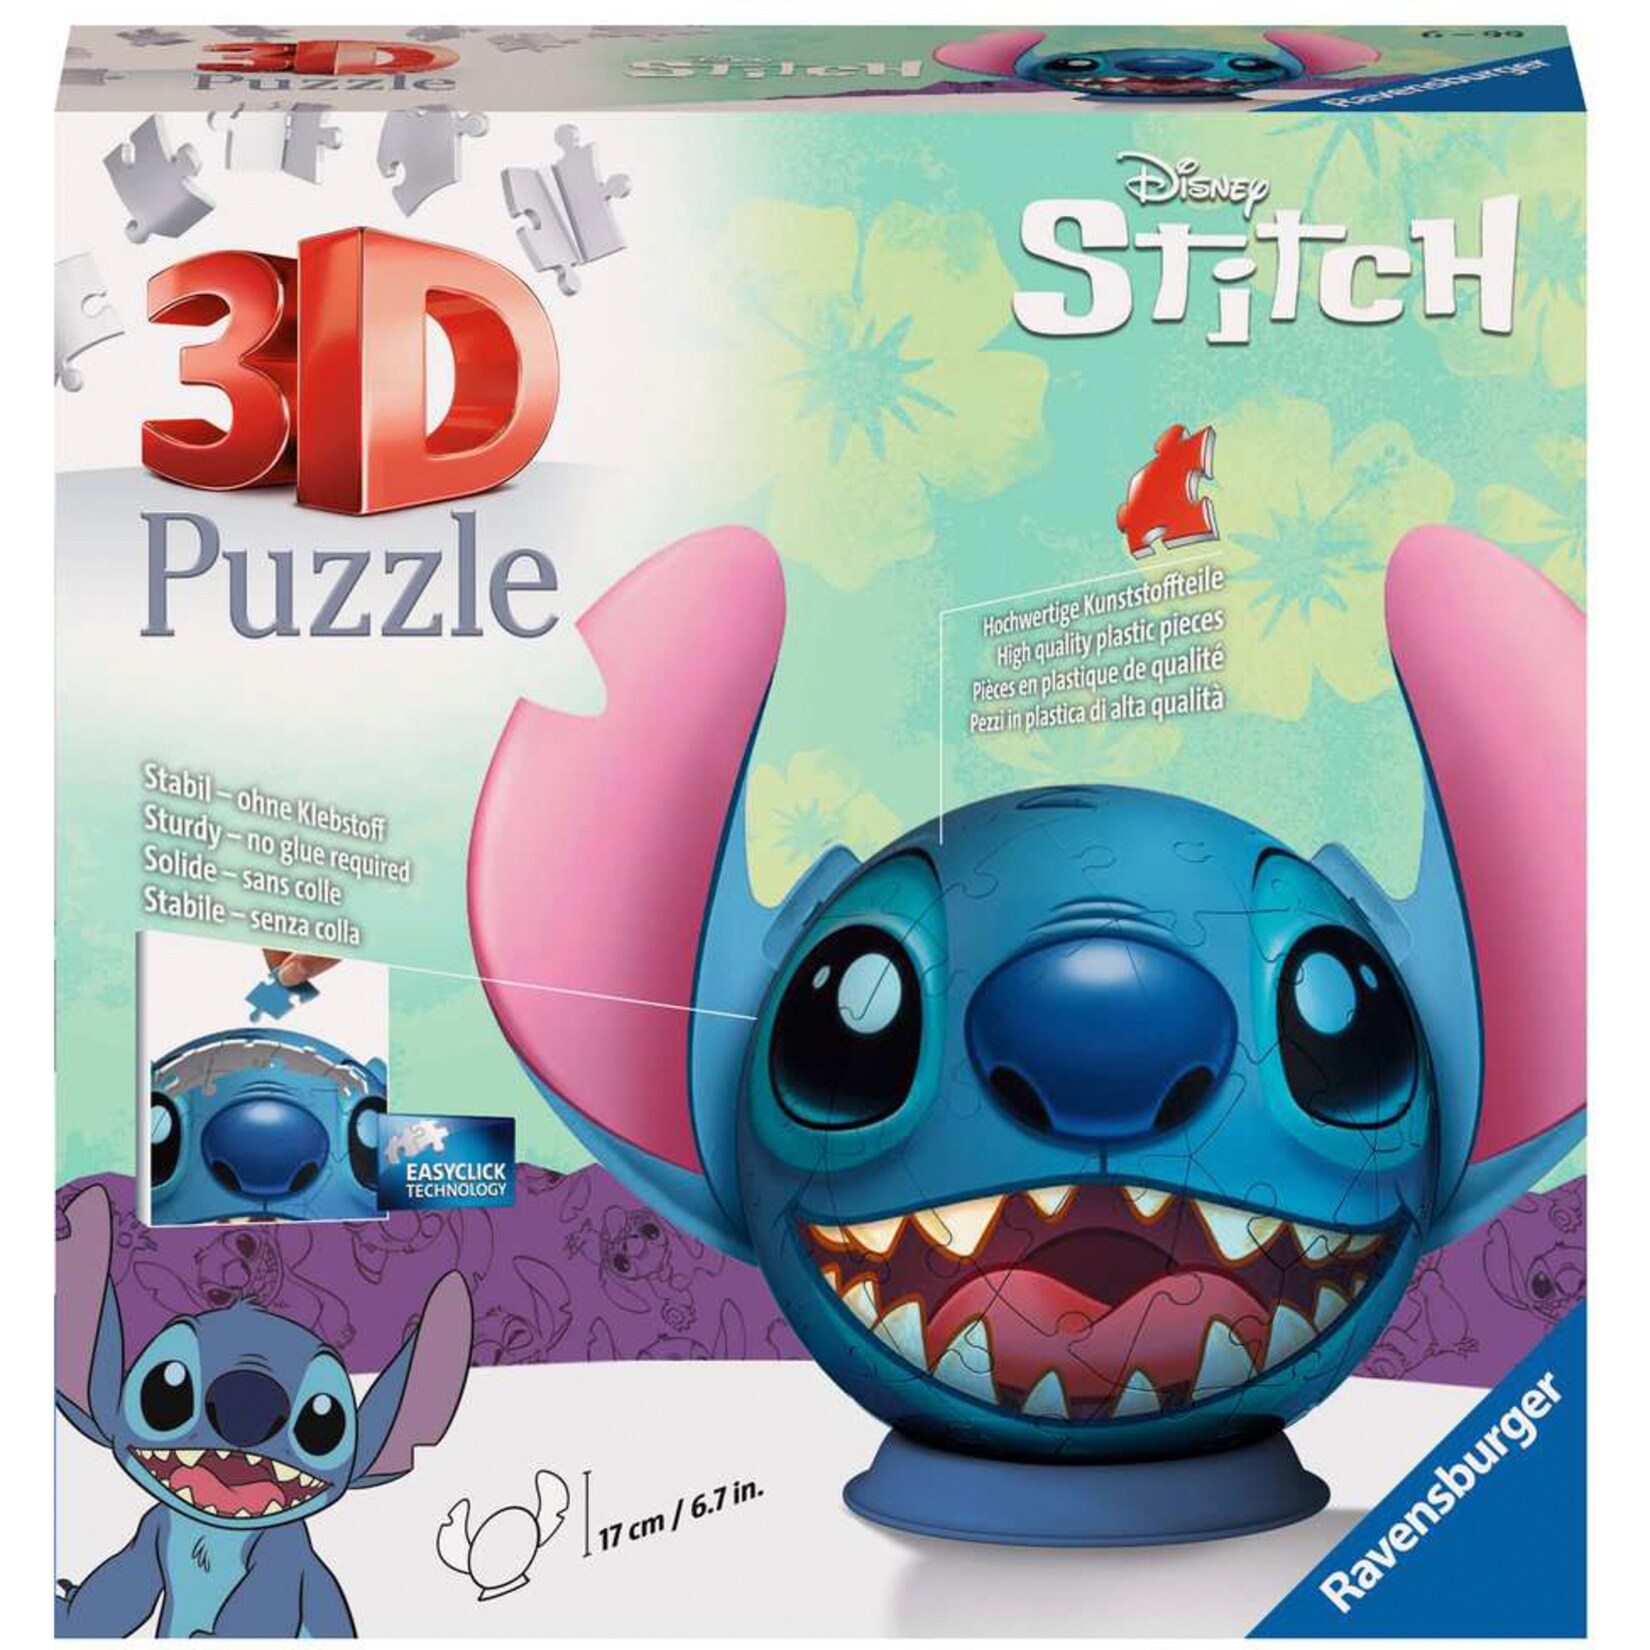 Ravensburger Puzzle 3D Puzzle-Ball Stitch mit Ohren